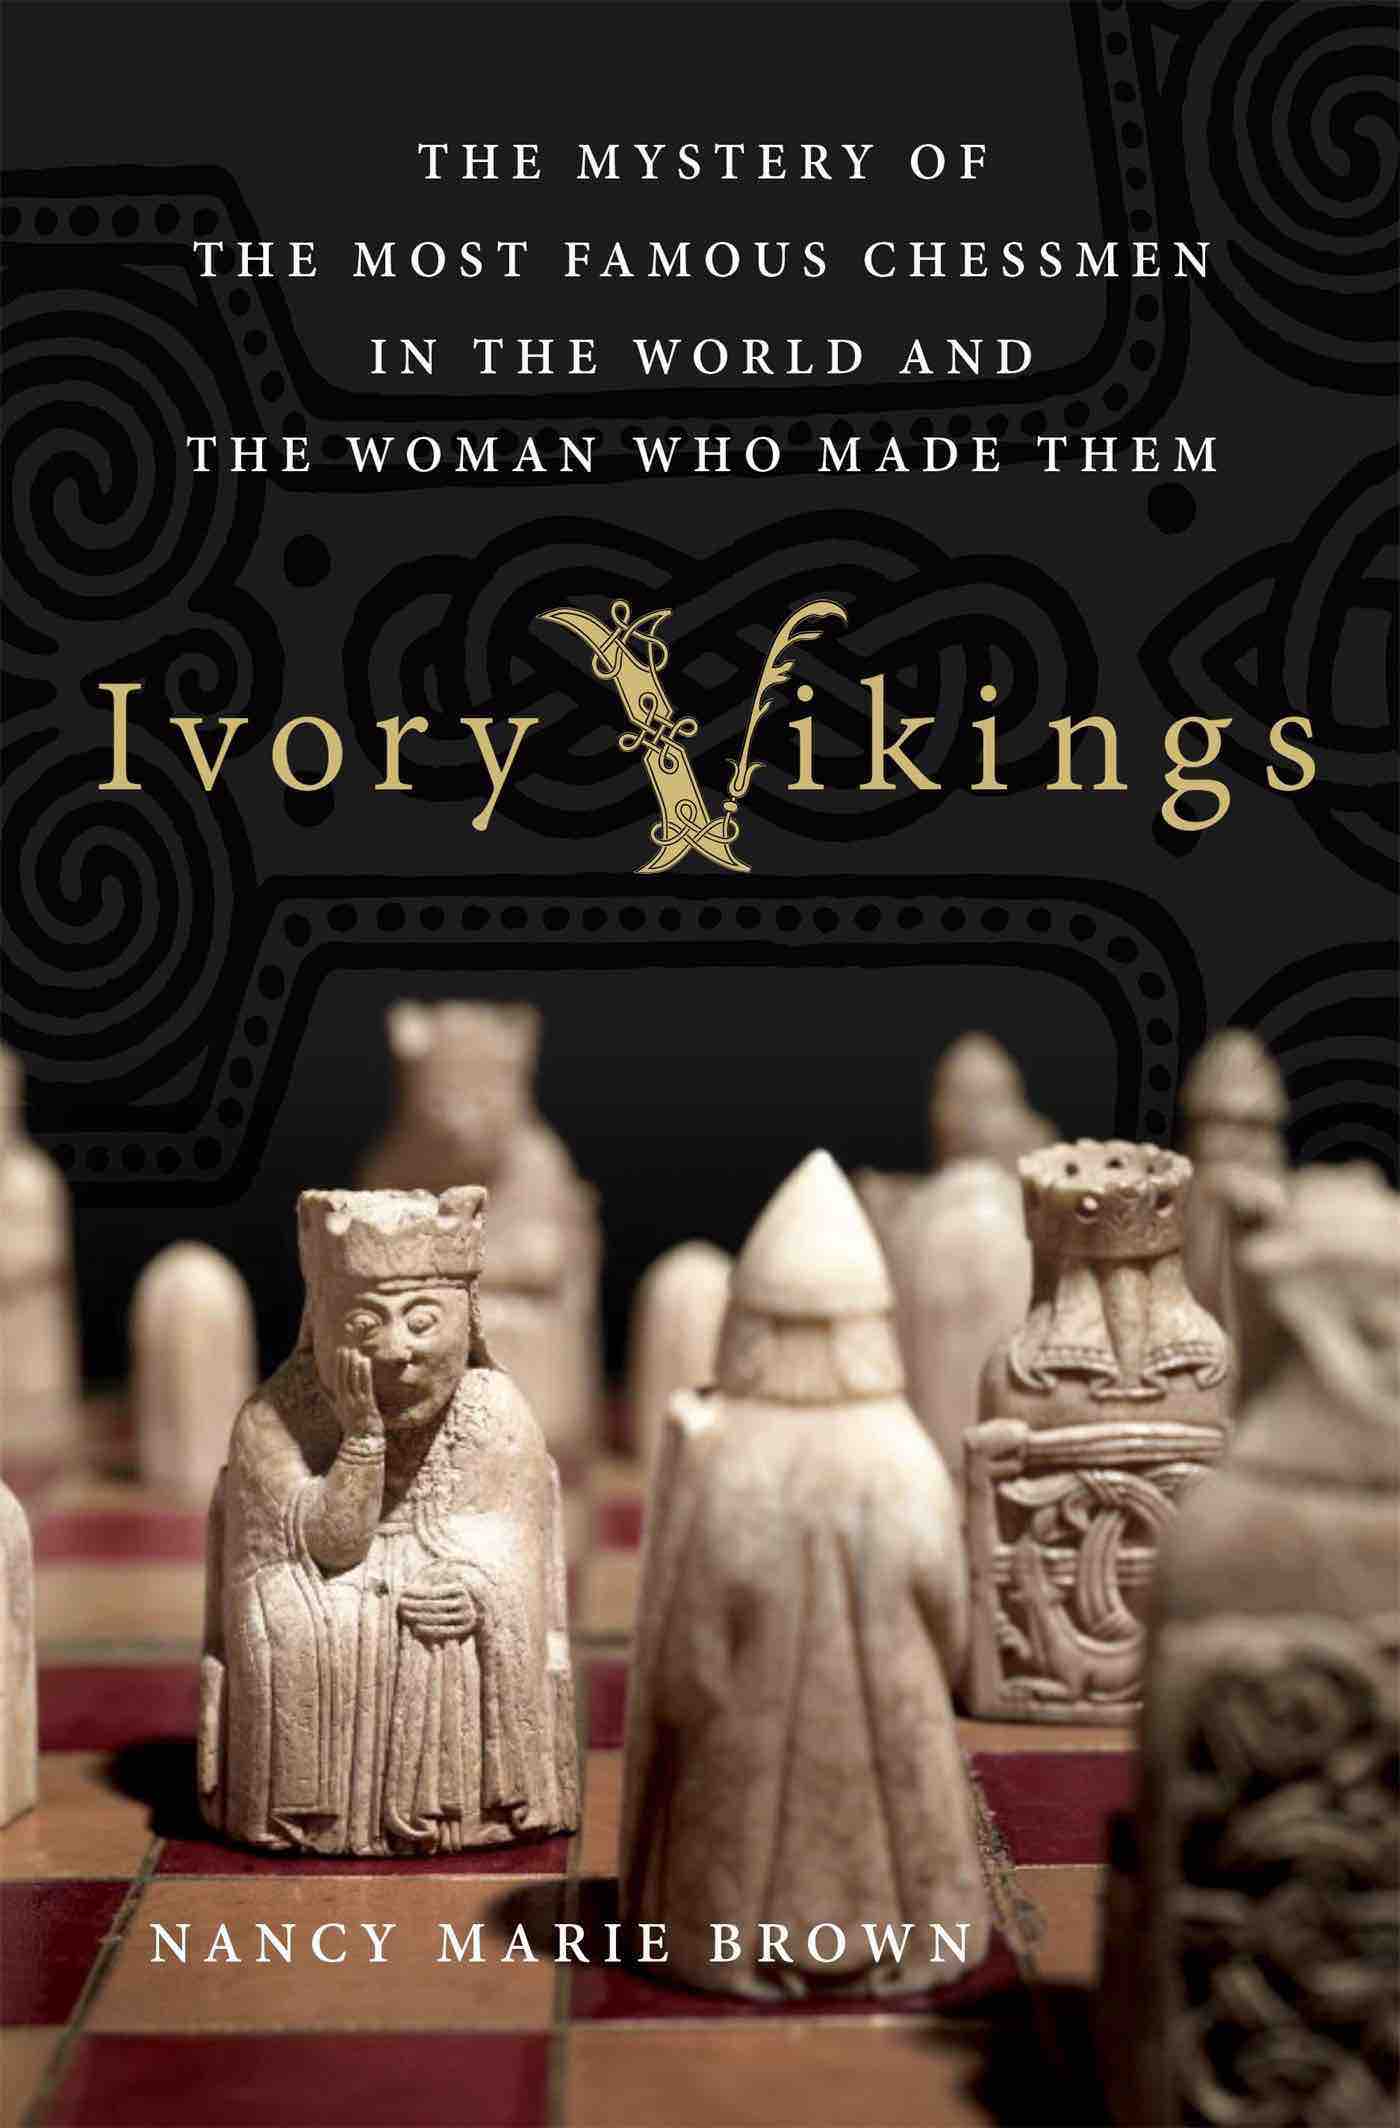 Ivory Vikings, St. Martin's Press 2015